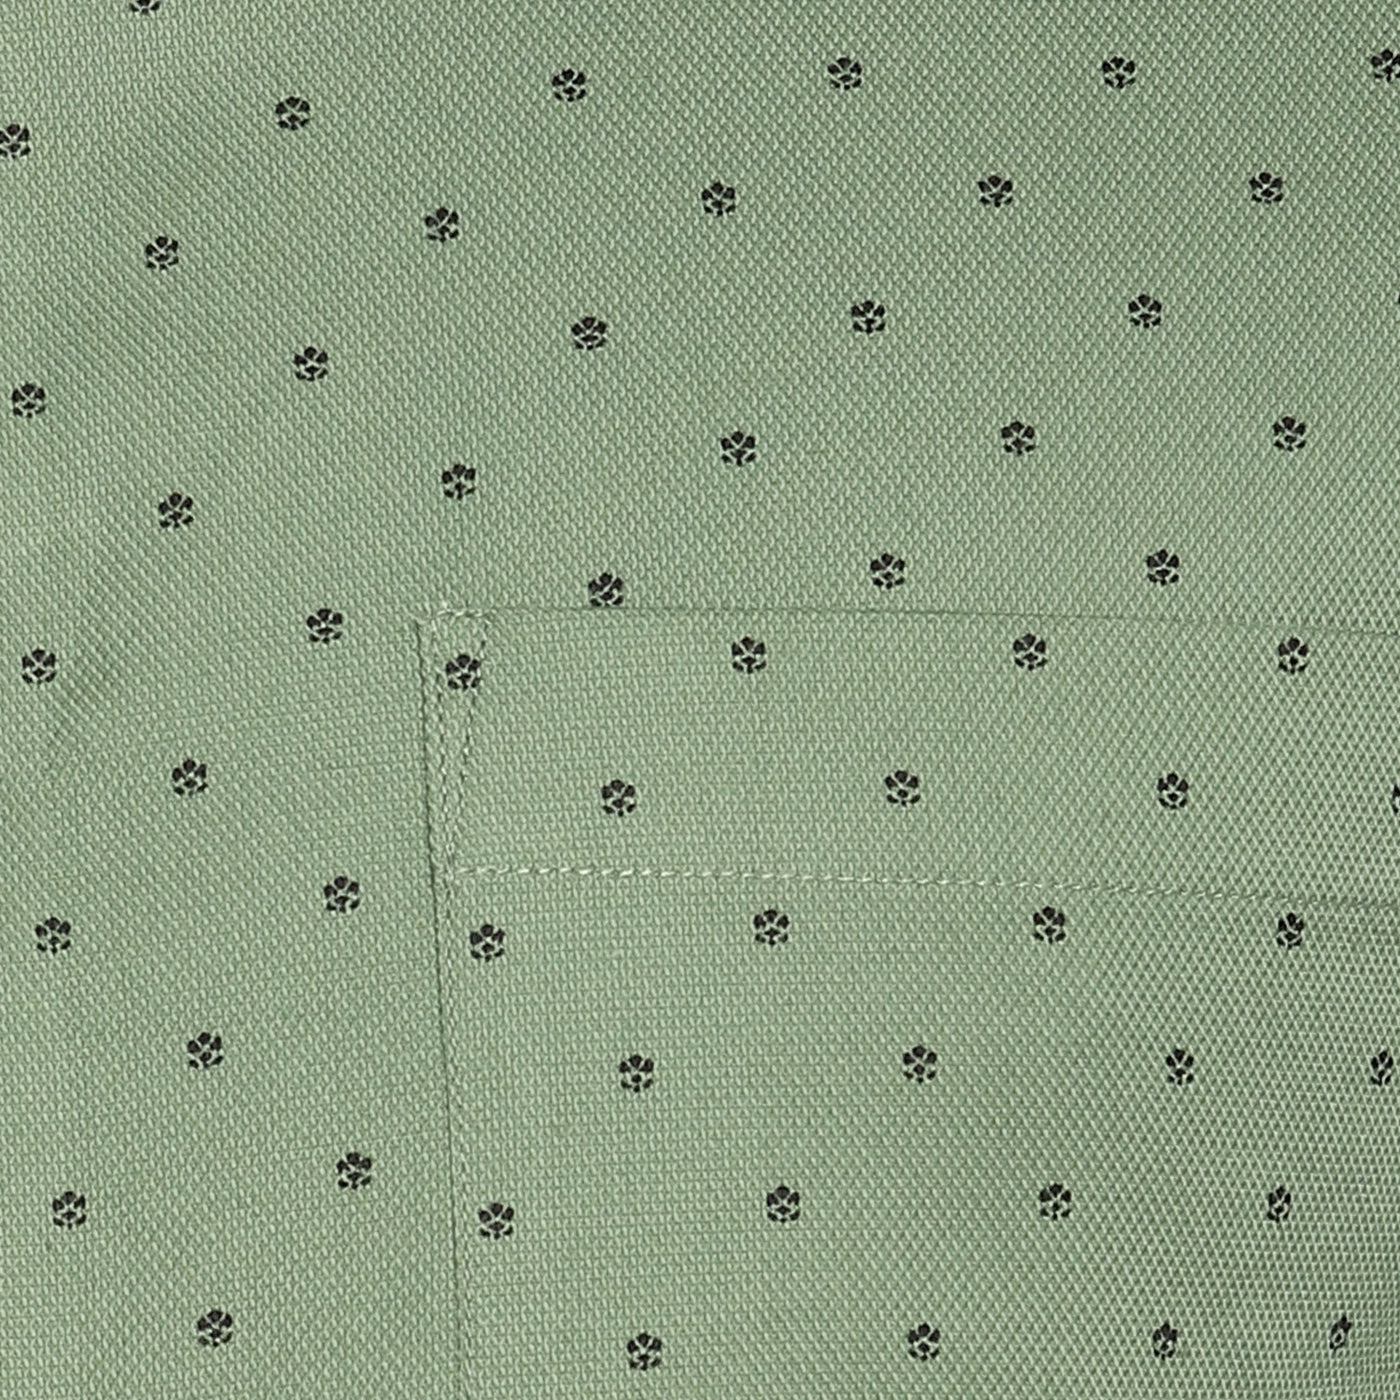 Cotton Light Green Slim Fit Printed Formal Shirt